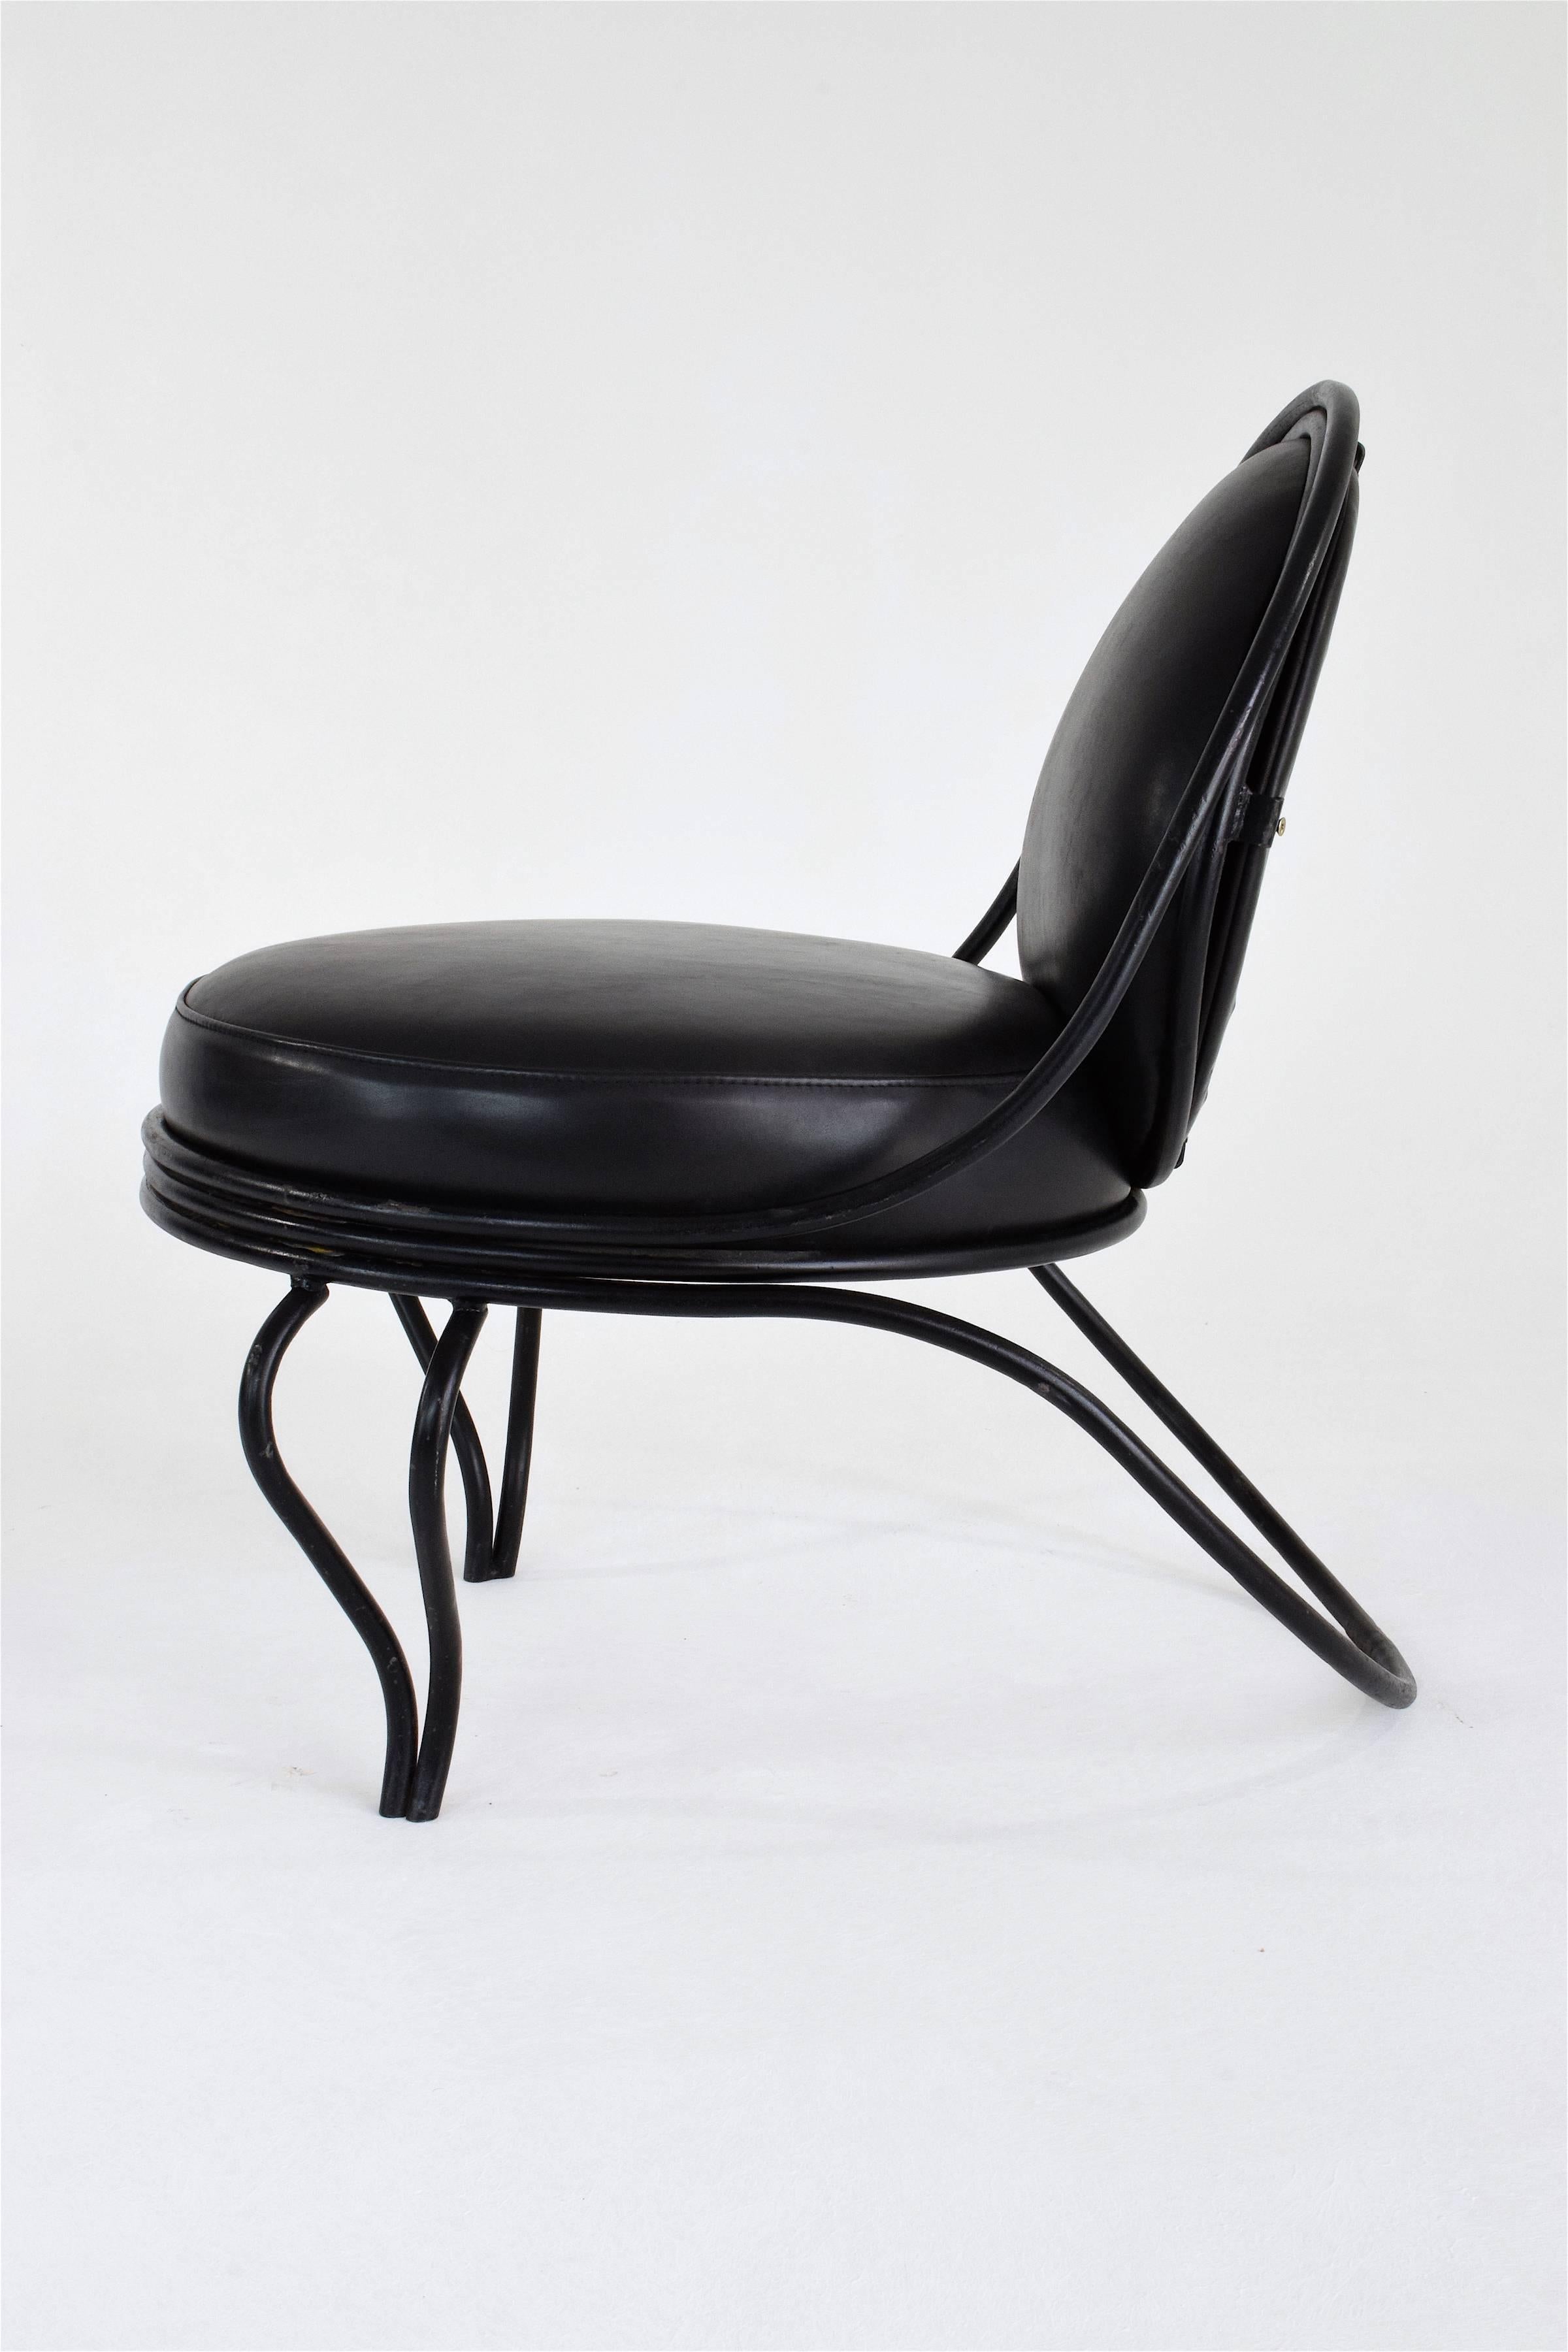 Lacquered Rare Midcentury Copacabana Chair by Mathieu Matégot, 1955 For Sale